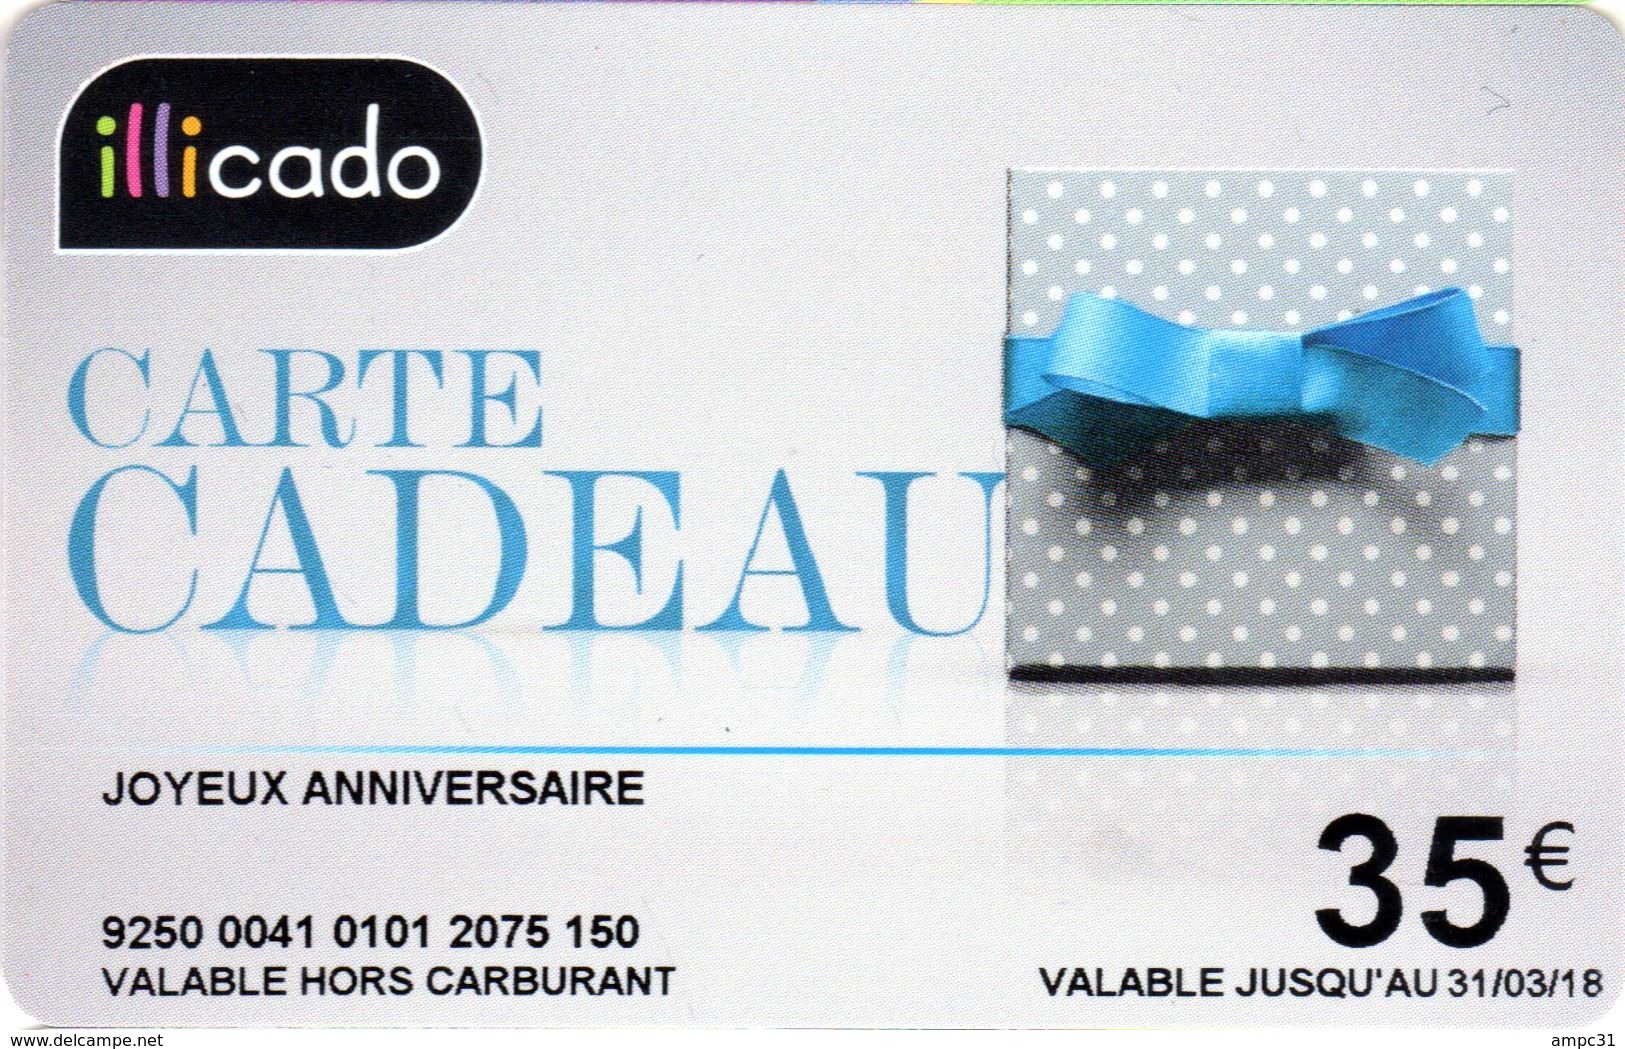 CARTE CADEAU, GESCHENKKARTE, ILLICADO GRISE PAQUET CADEAU 35€ - Gift Cards